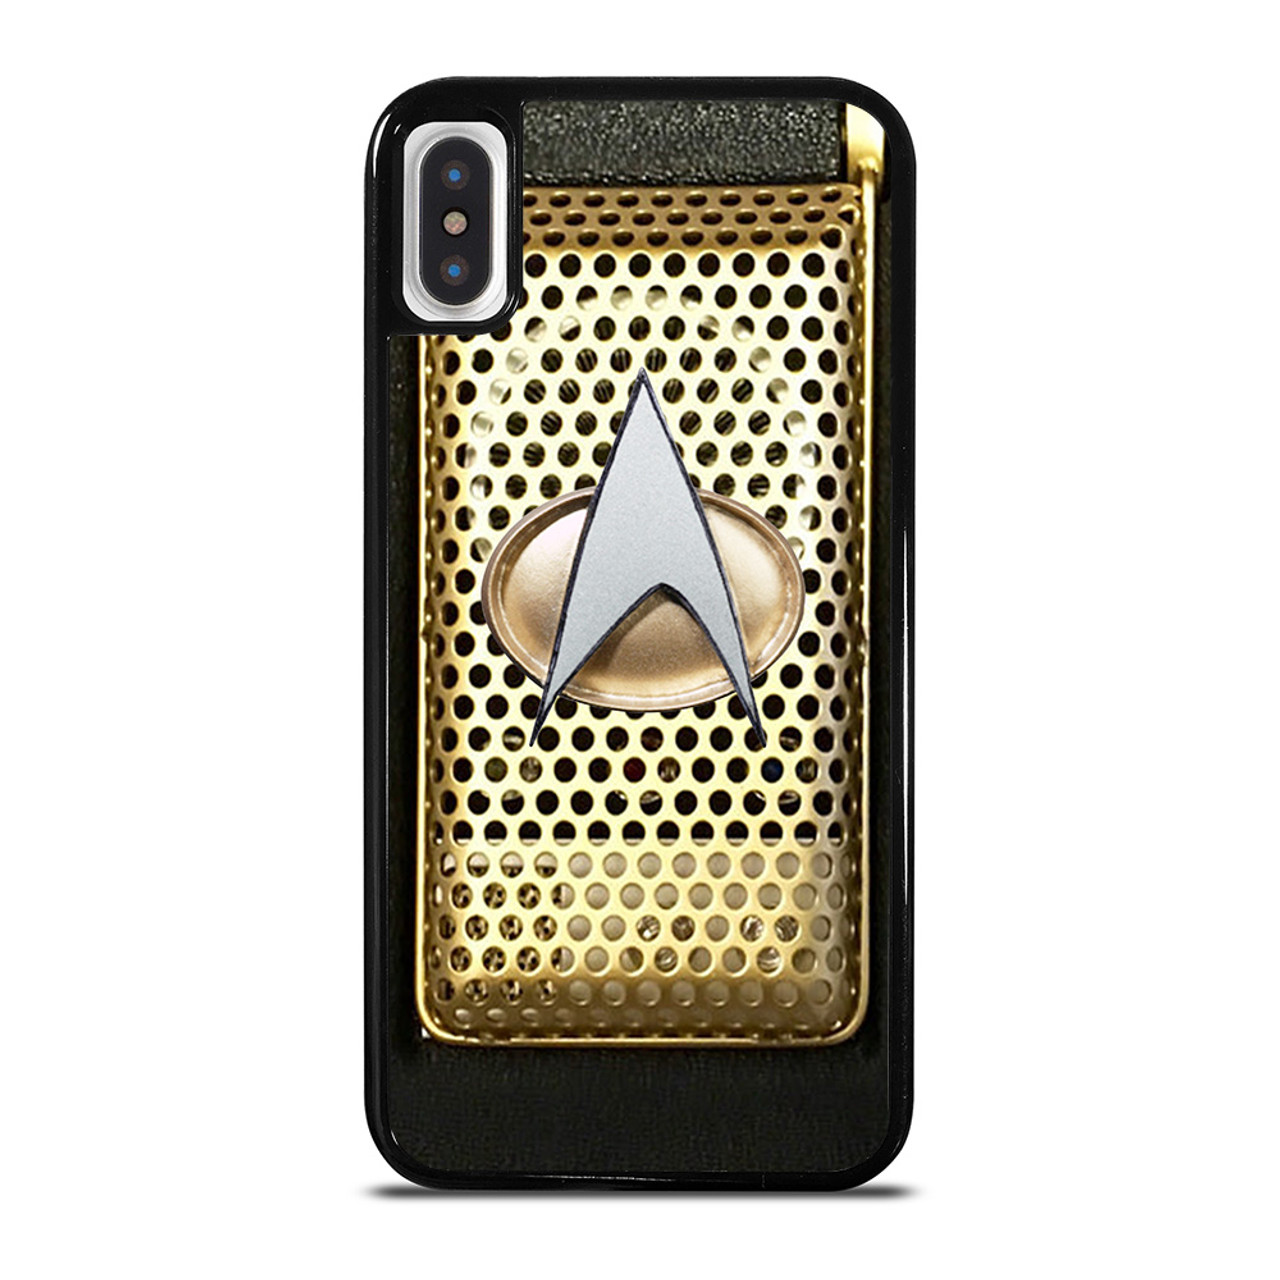 STAR TREK COMMUNICATOR iPhone X / XS Case Cover